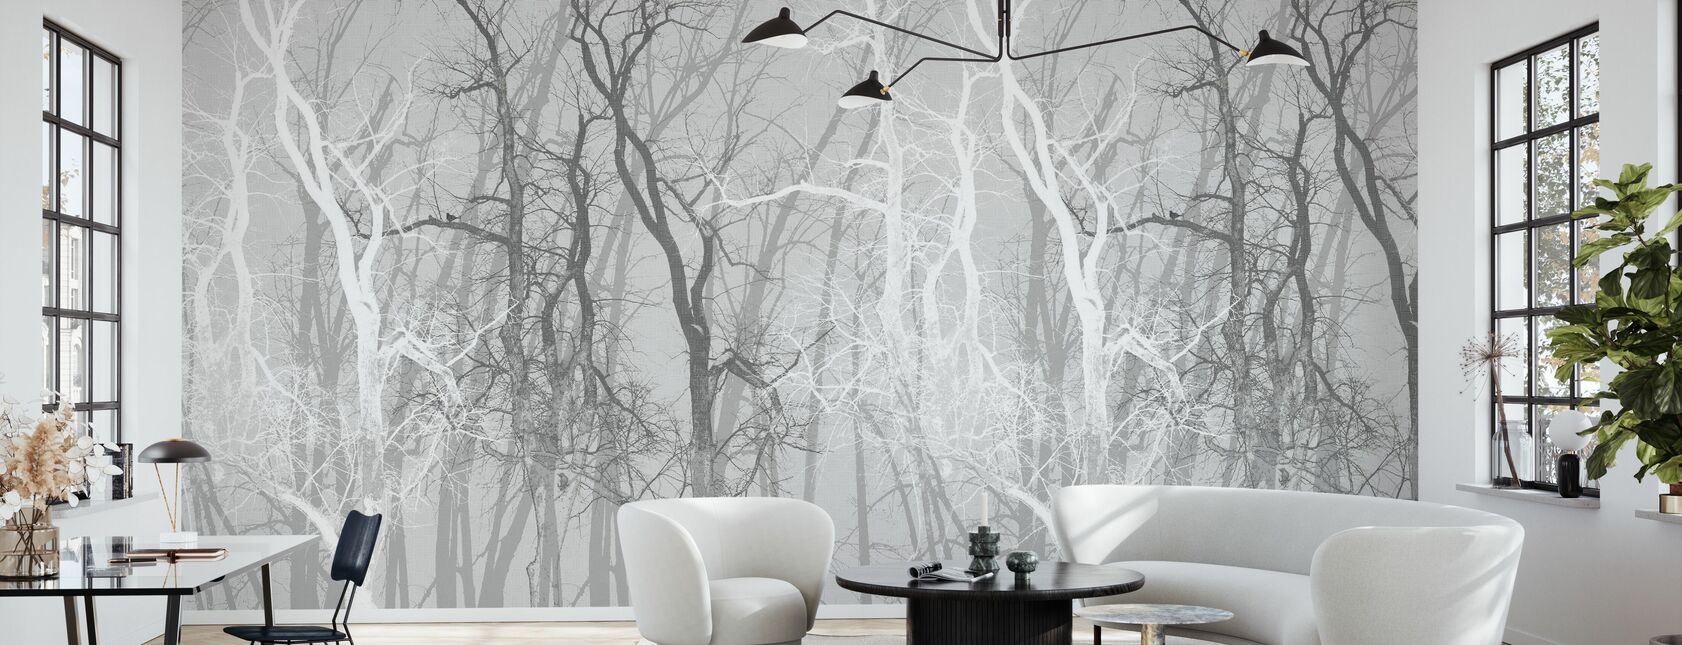 Carvão vegetal Wander Trees - Papel de parede - Sala de estar